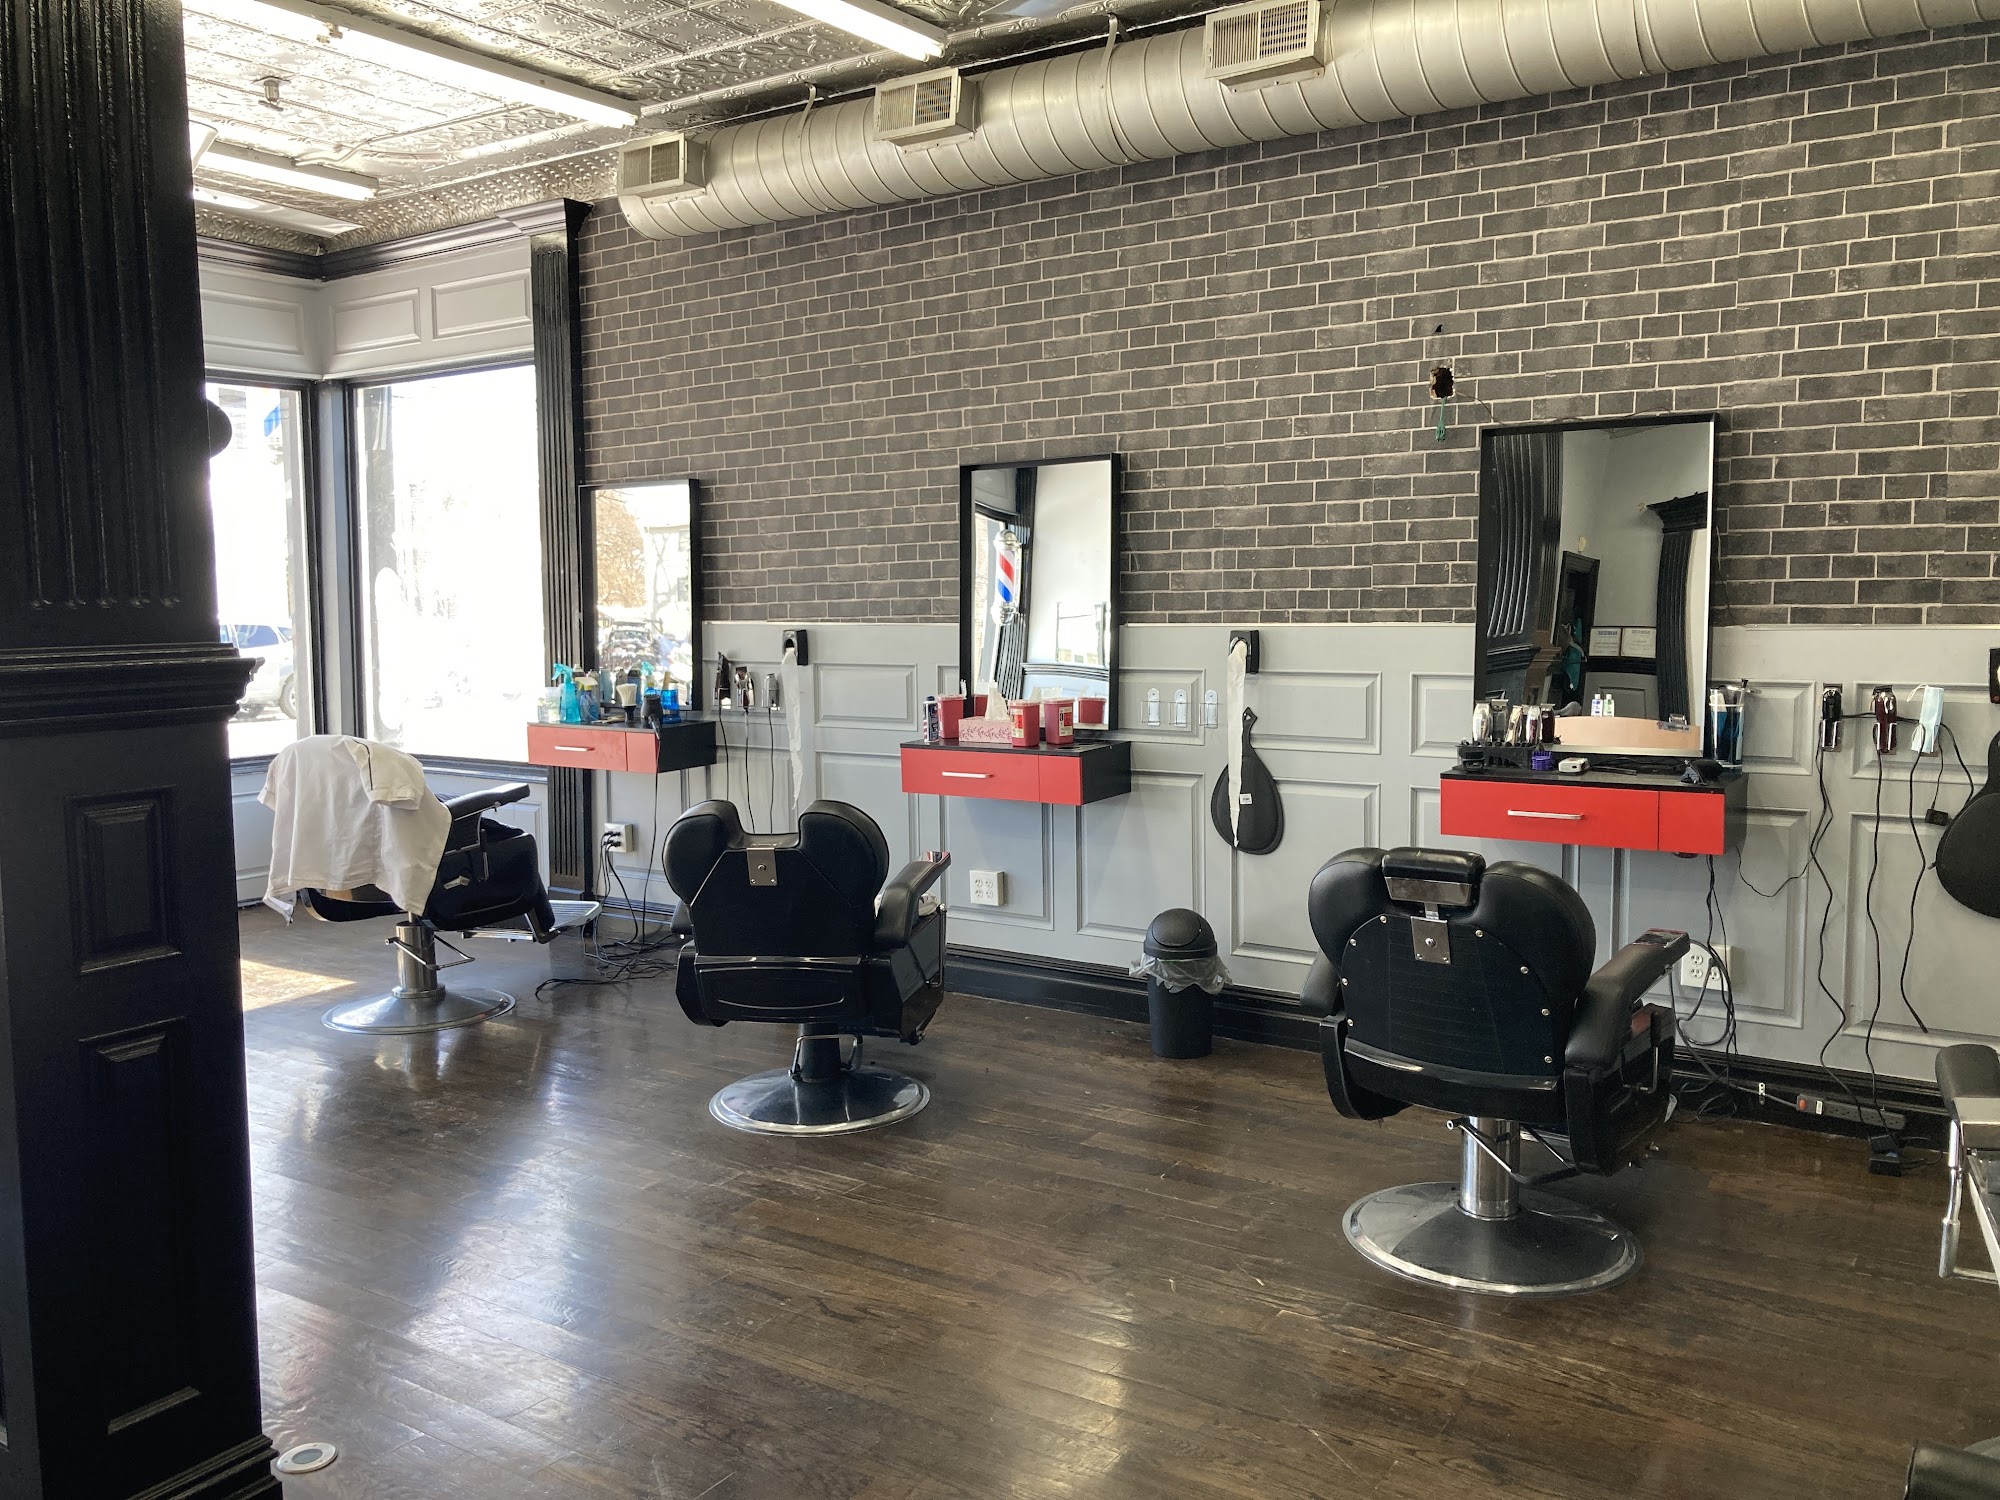 Haledon's Barbershop and Salon 359 Belmont Ave, Haledon New Jersey 07508